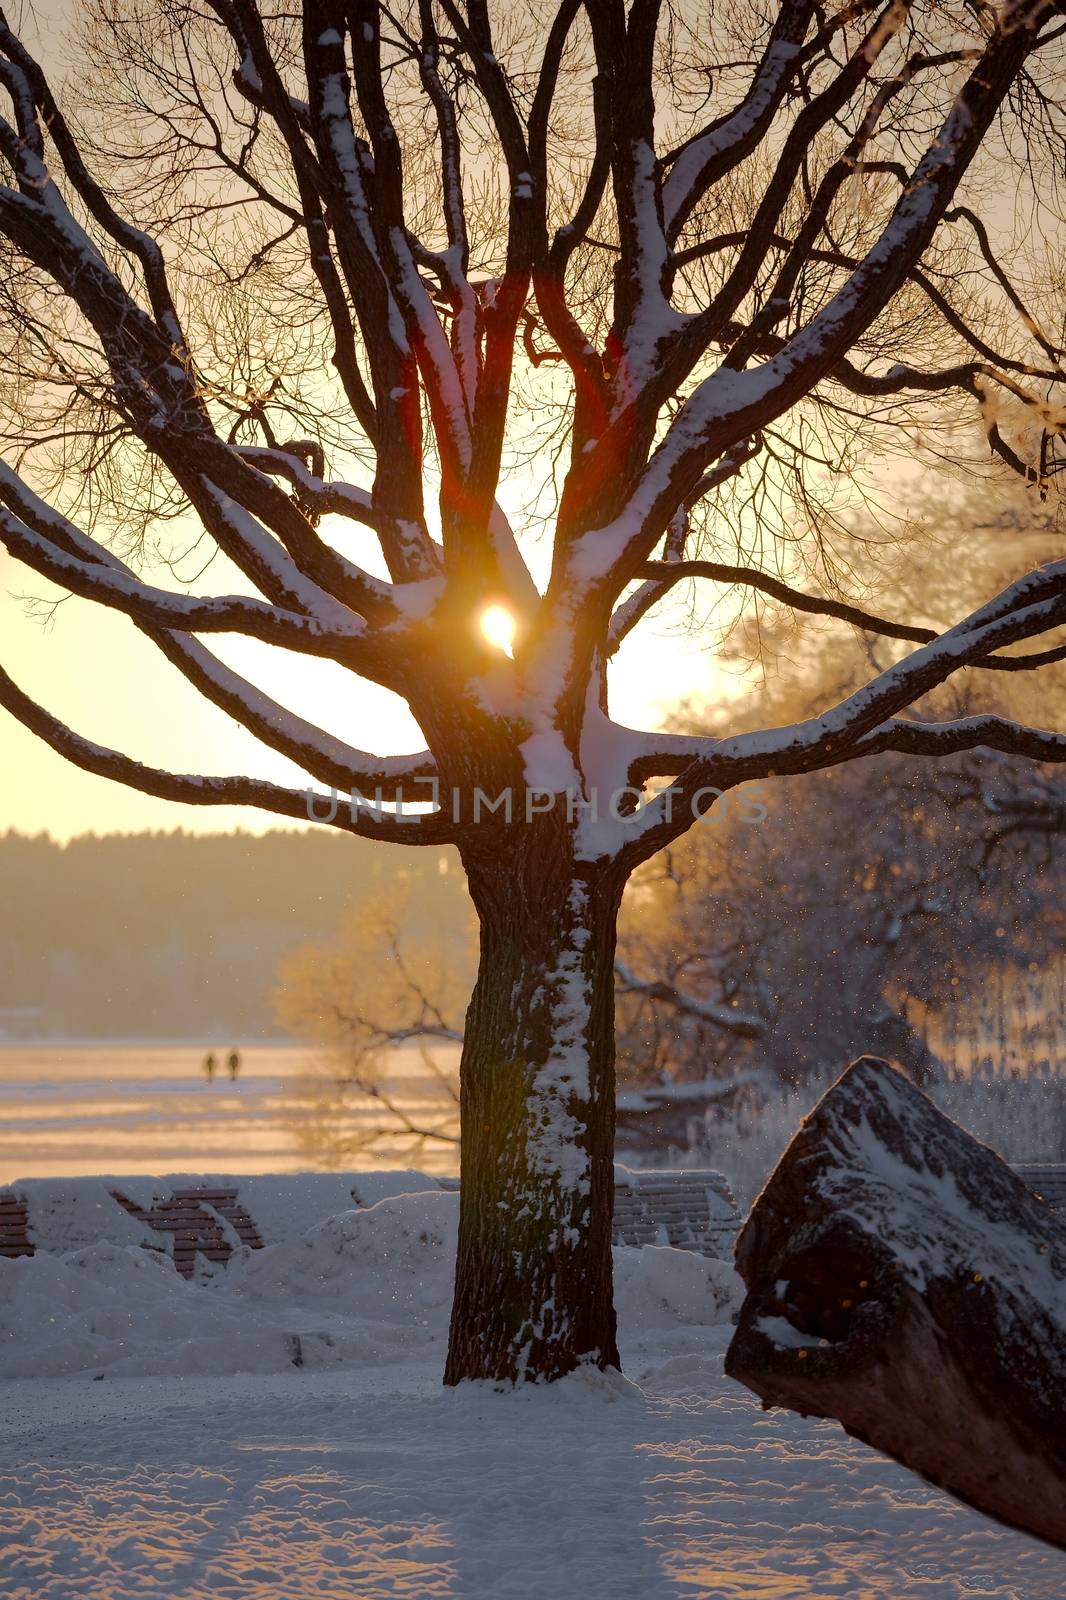 Winter tree with sunlight peeking through